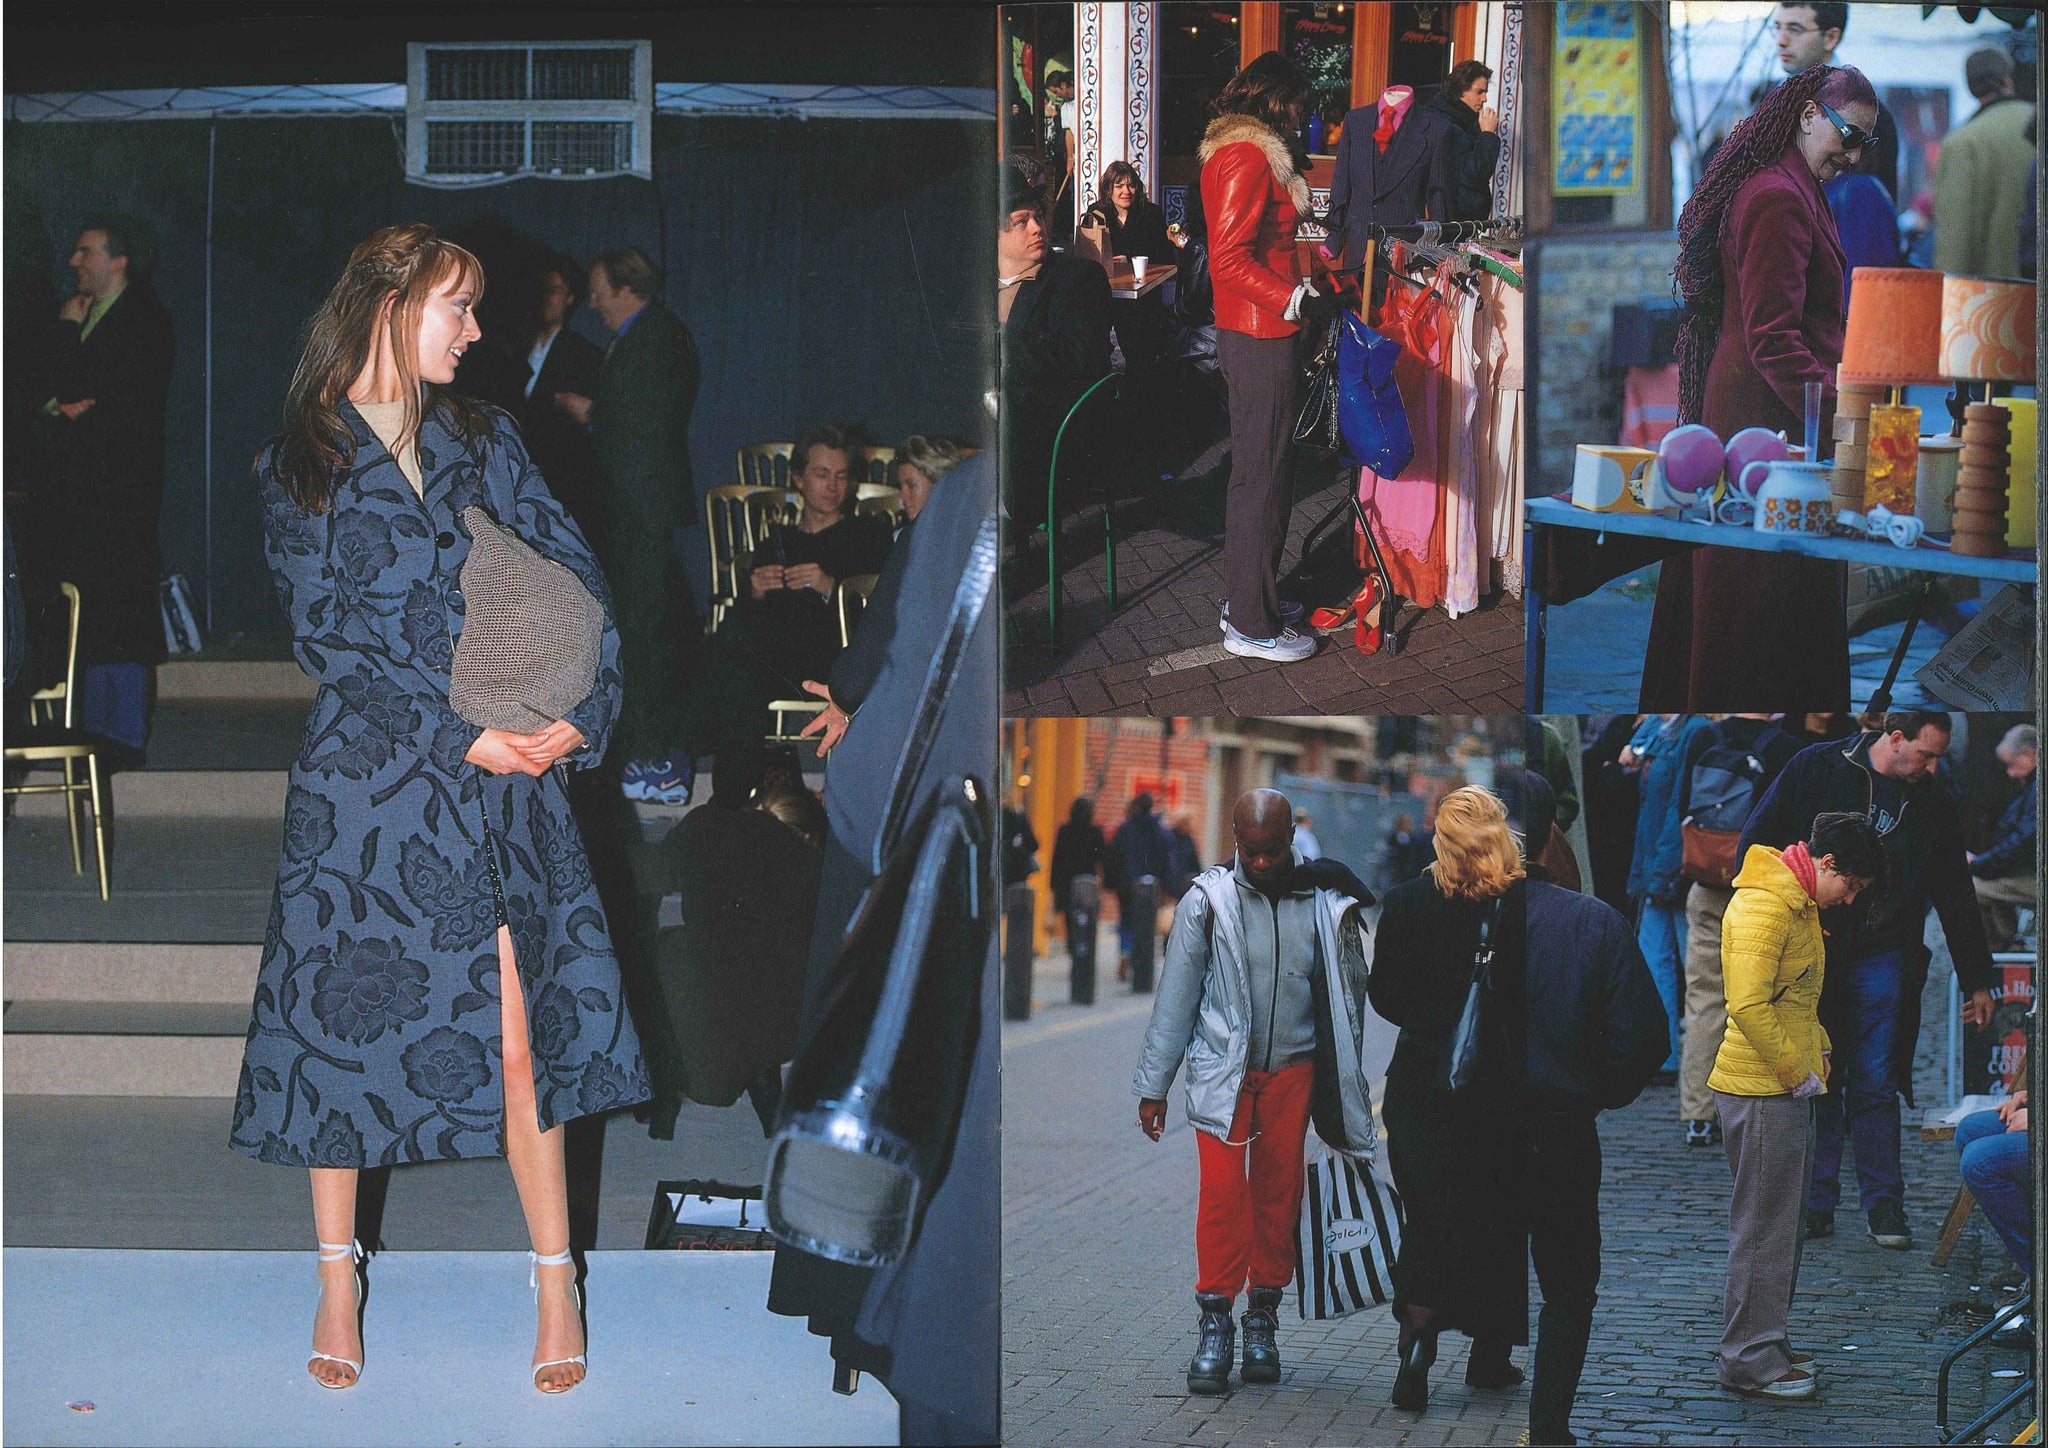 STREET magazine no. 106 / may 1998 / street fashion in london / Shoichi Aoki